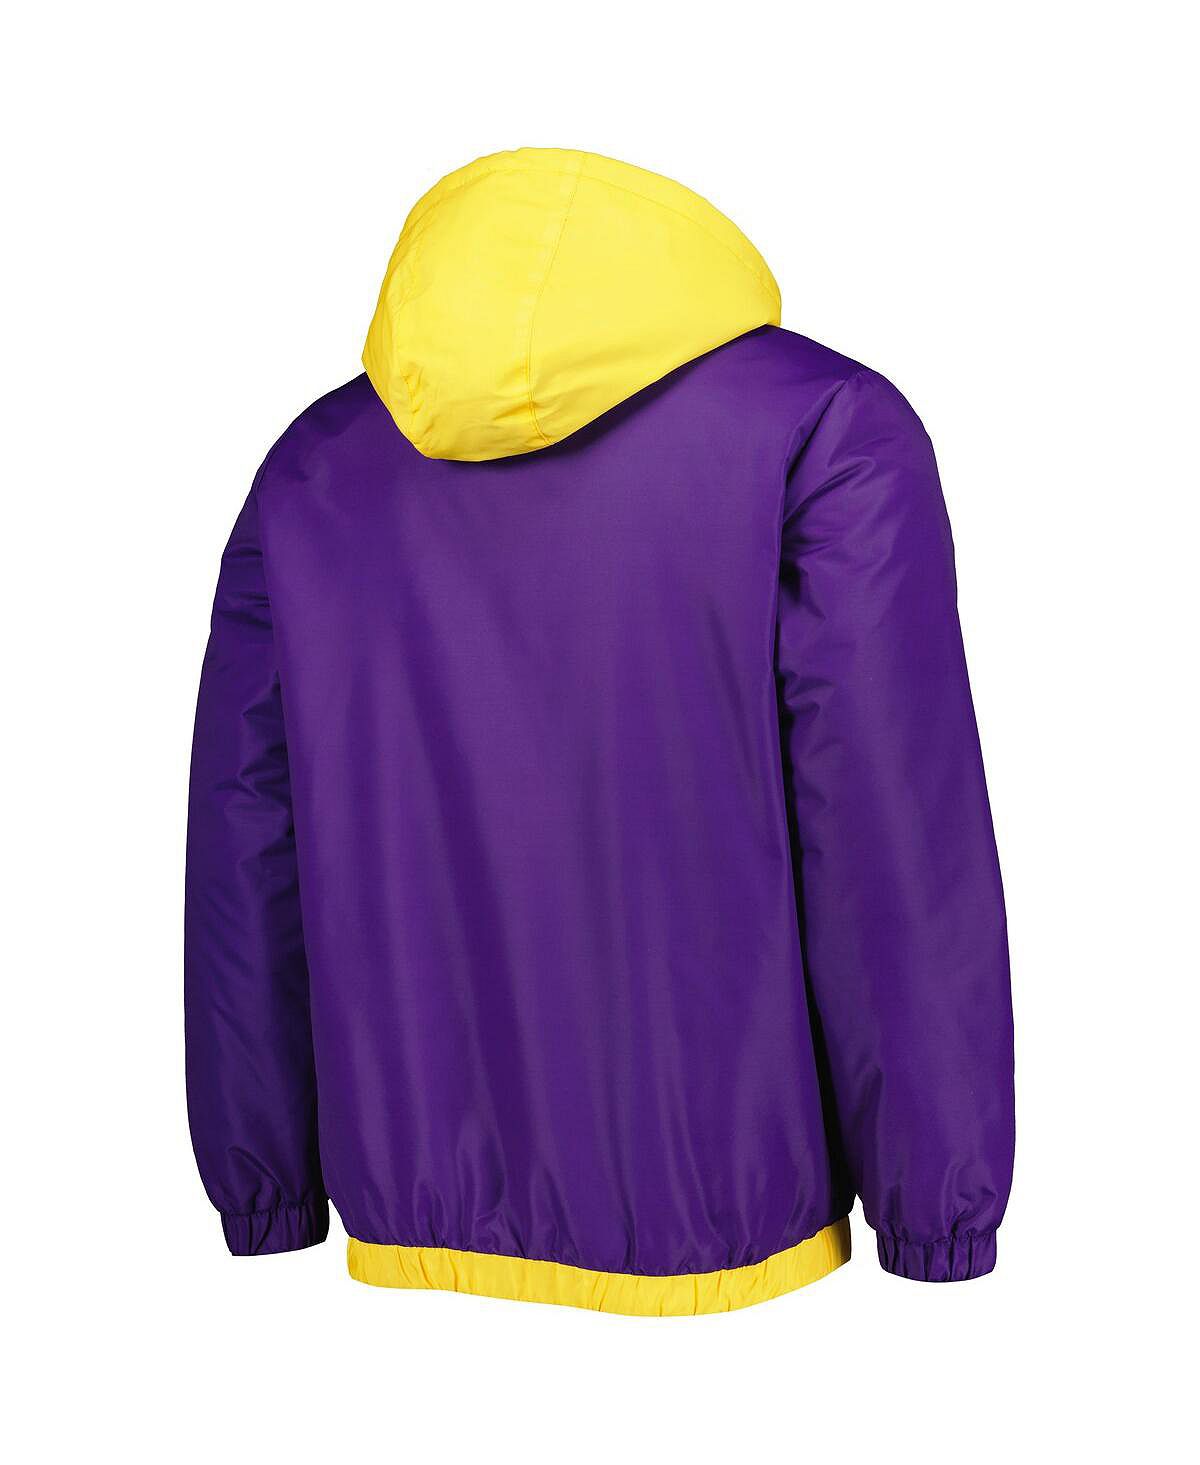 Мужская фиолетовая куртка